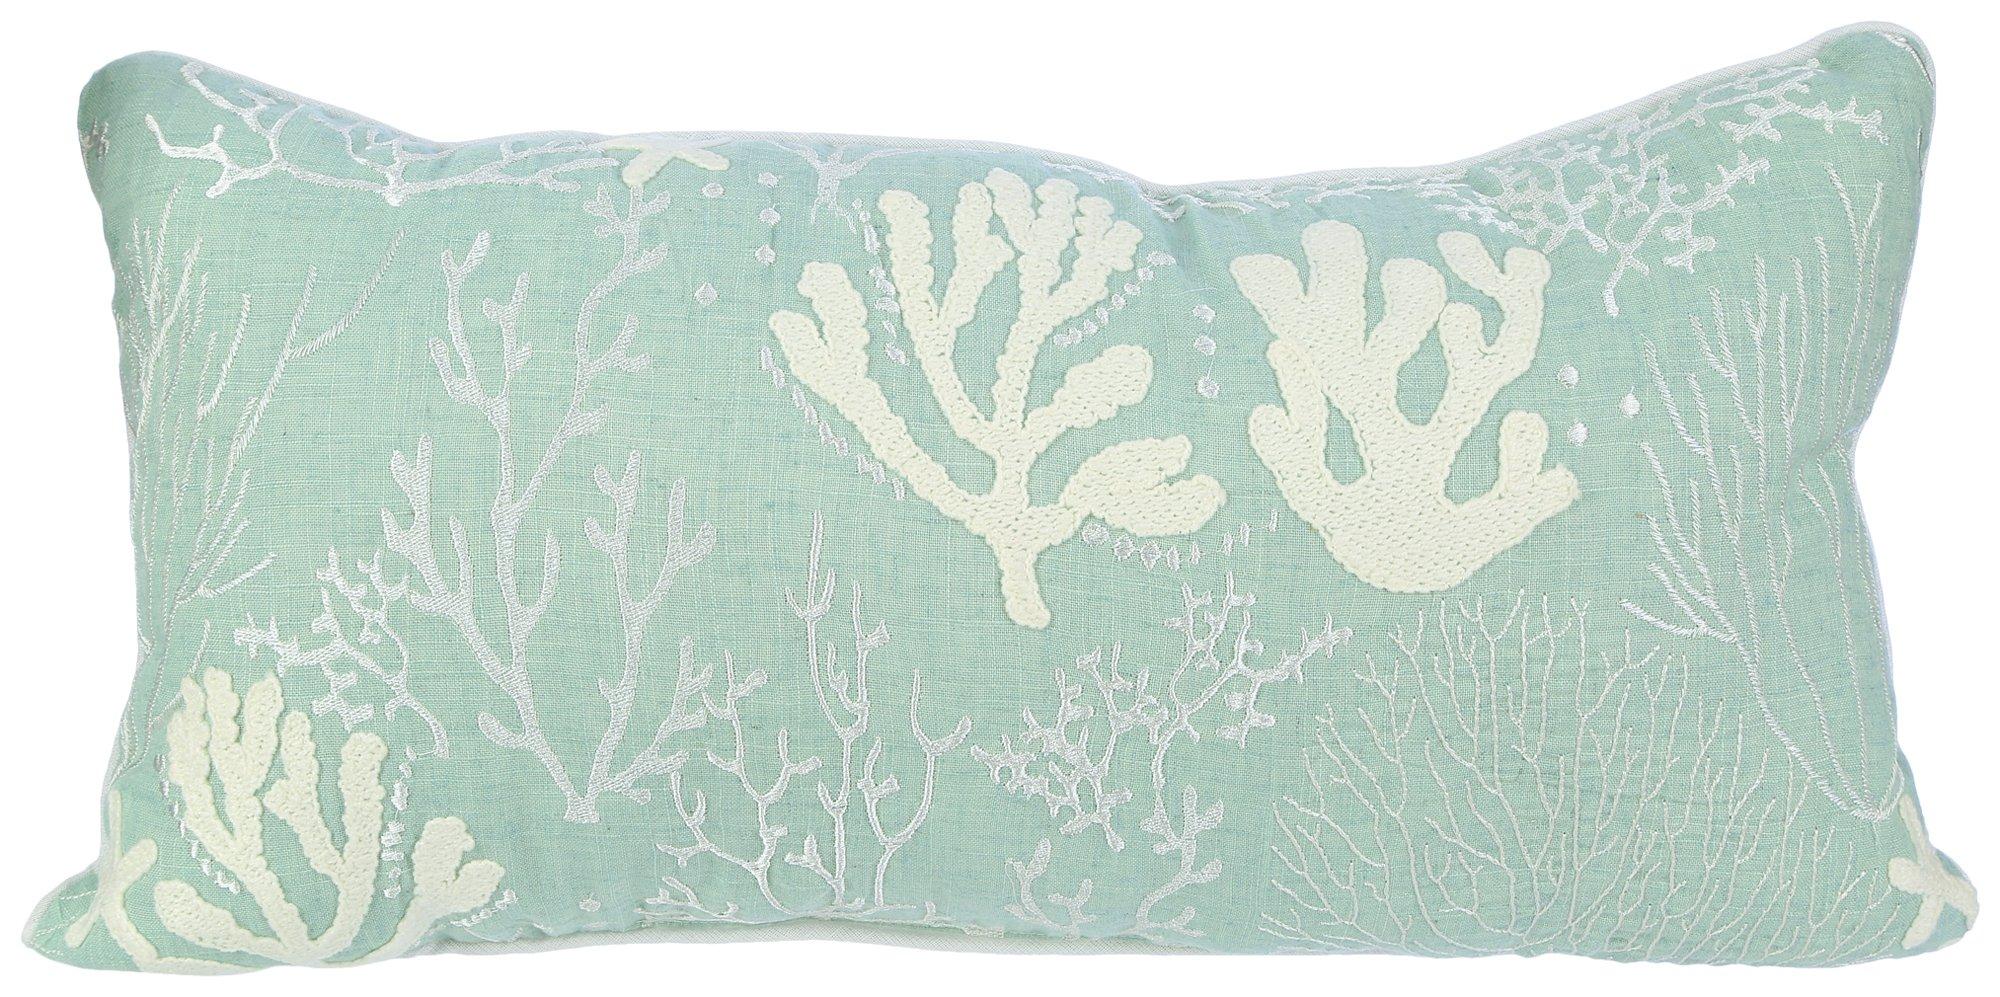 12 x 24 Coral Decorative Pillow